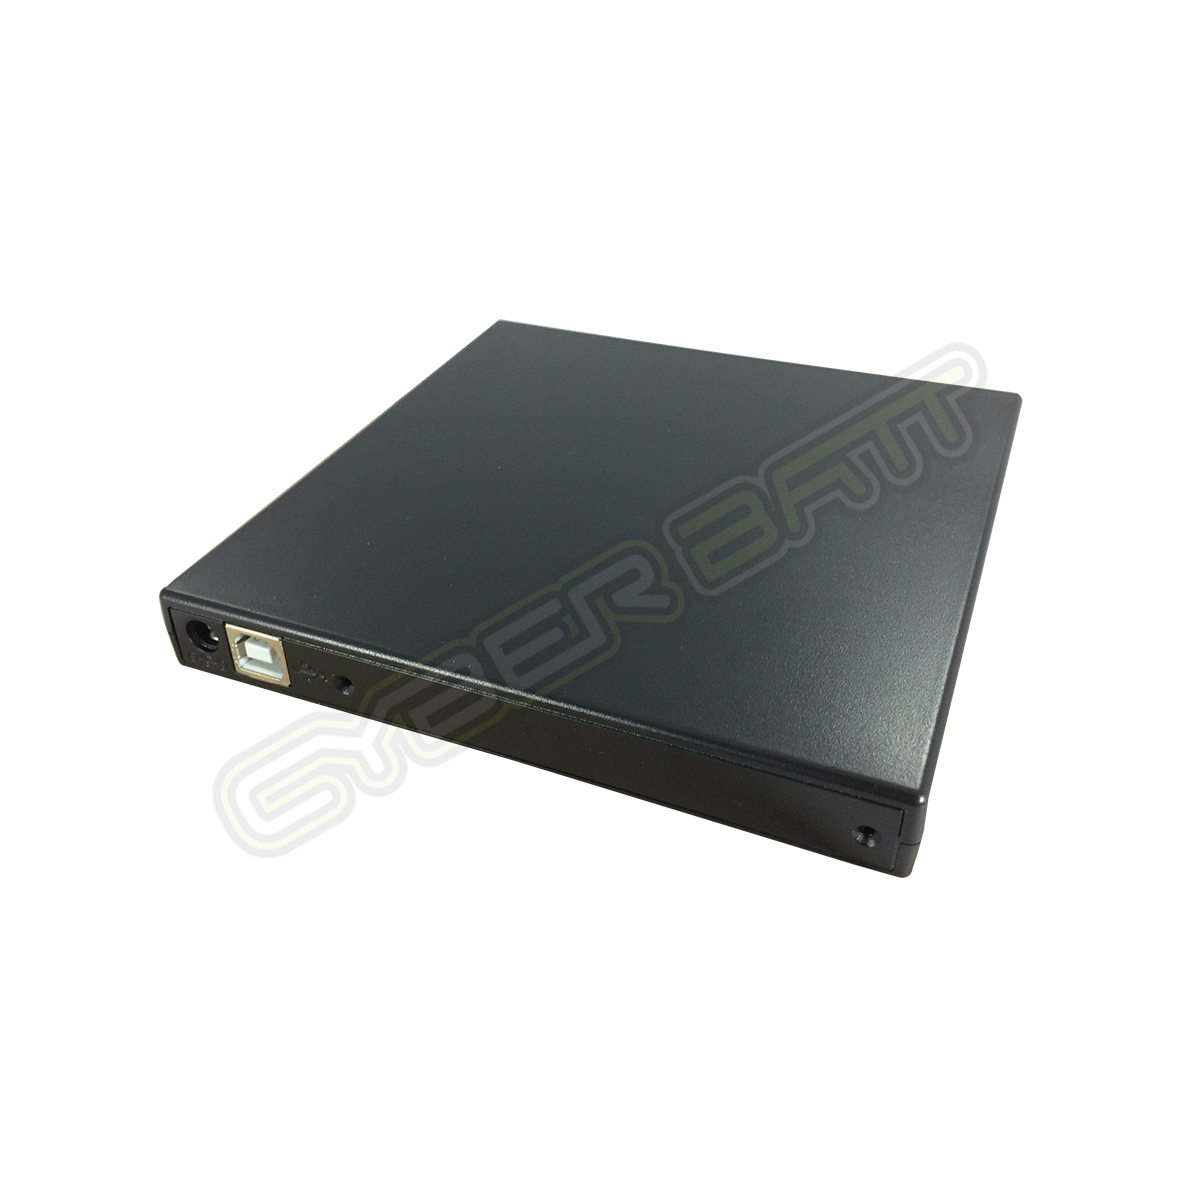 USB 2.0 Slim Portable Optical Drive (IDE)